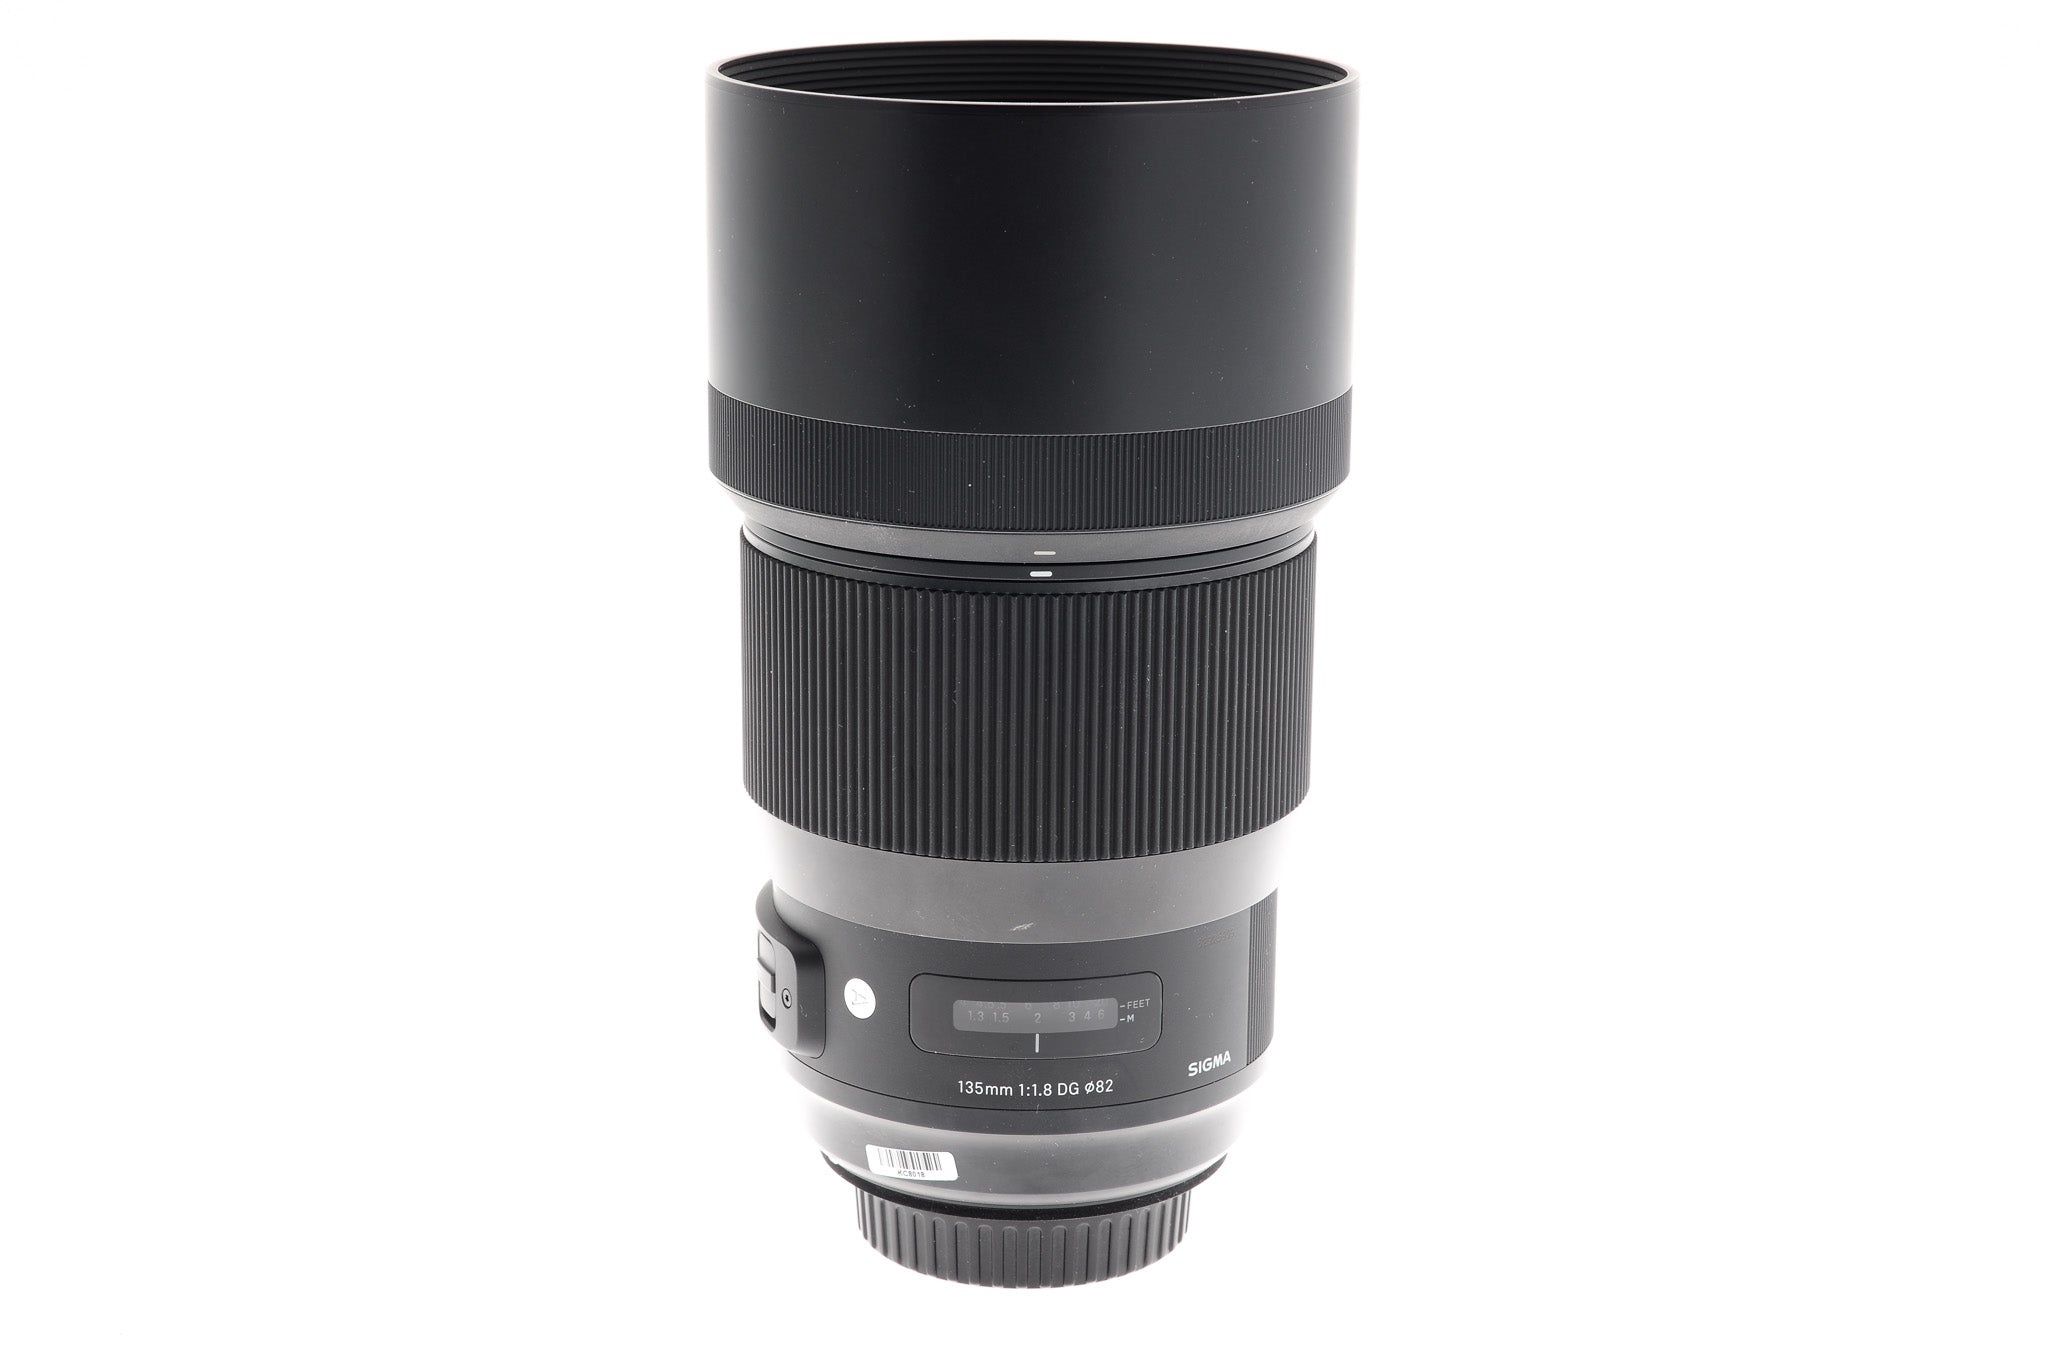 Sigma 135mm f1.8 DG HSM Art - Lens